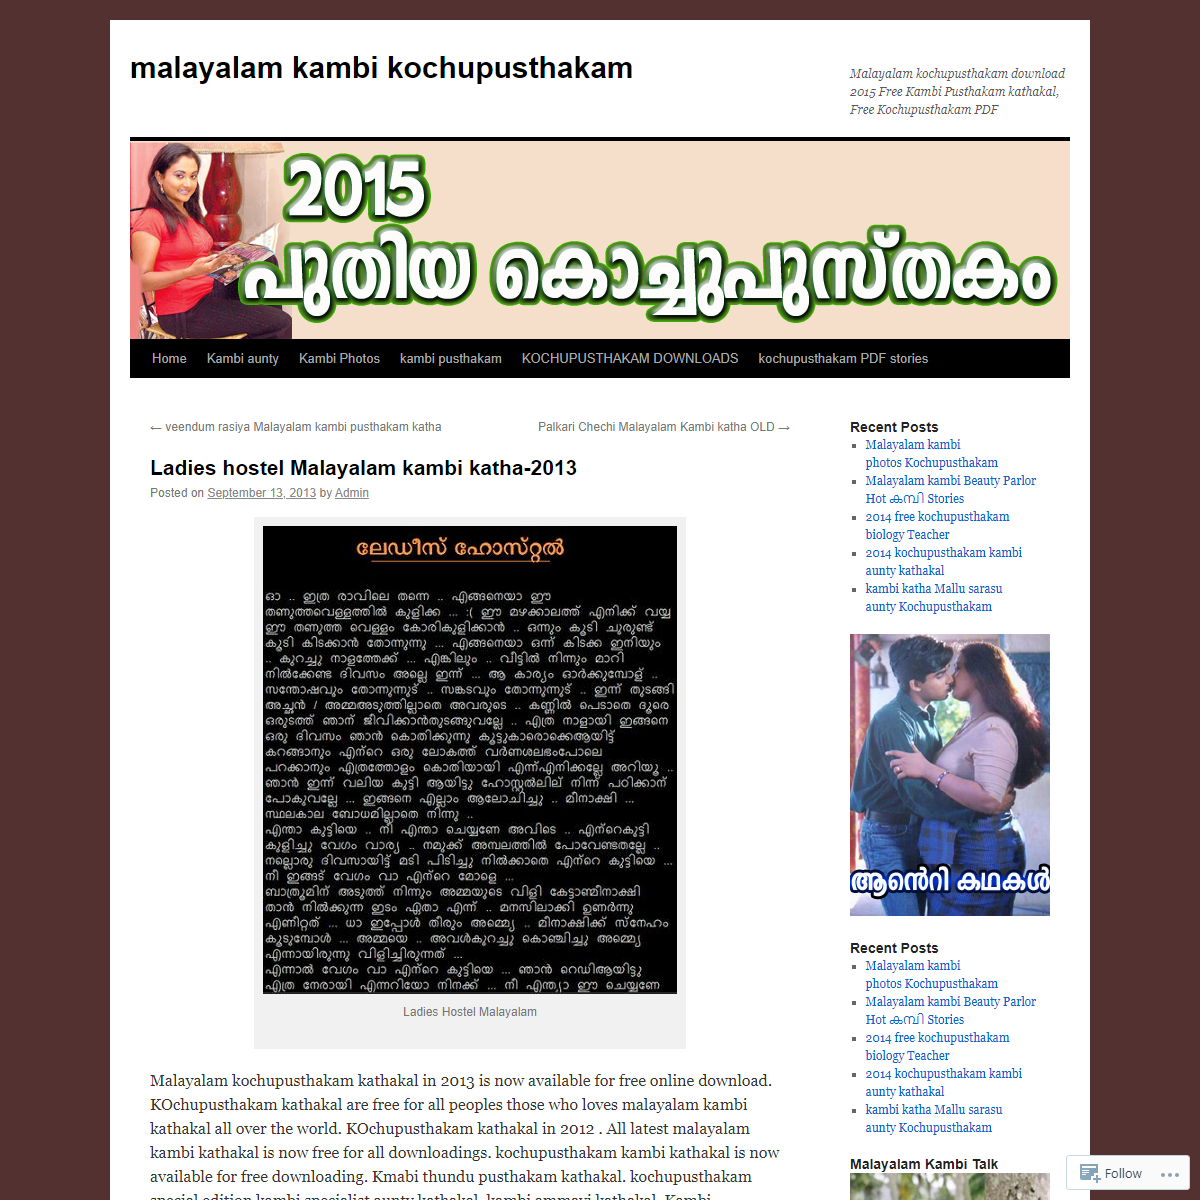 A complete backup of https://kochupusthakamlatest.wordpress.com/2013/09/13/ladies-hostel-malayalam-kambi-katha-2013/